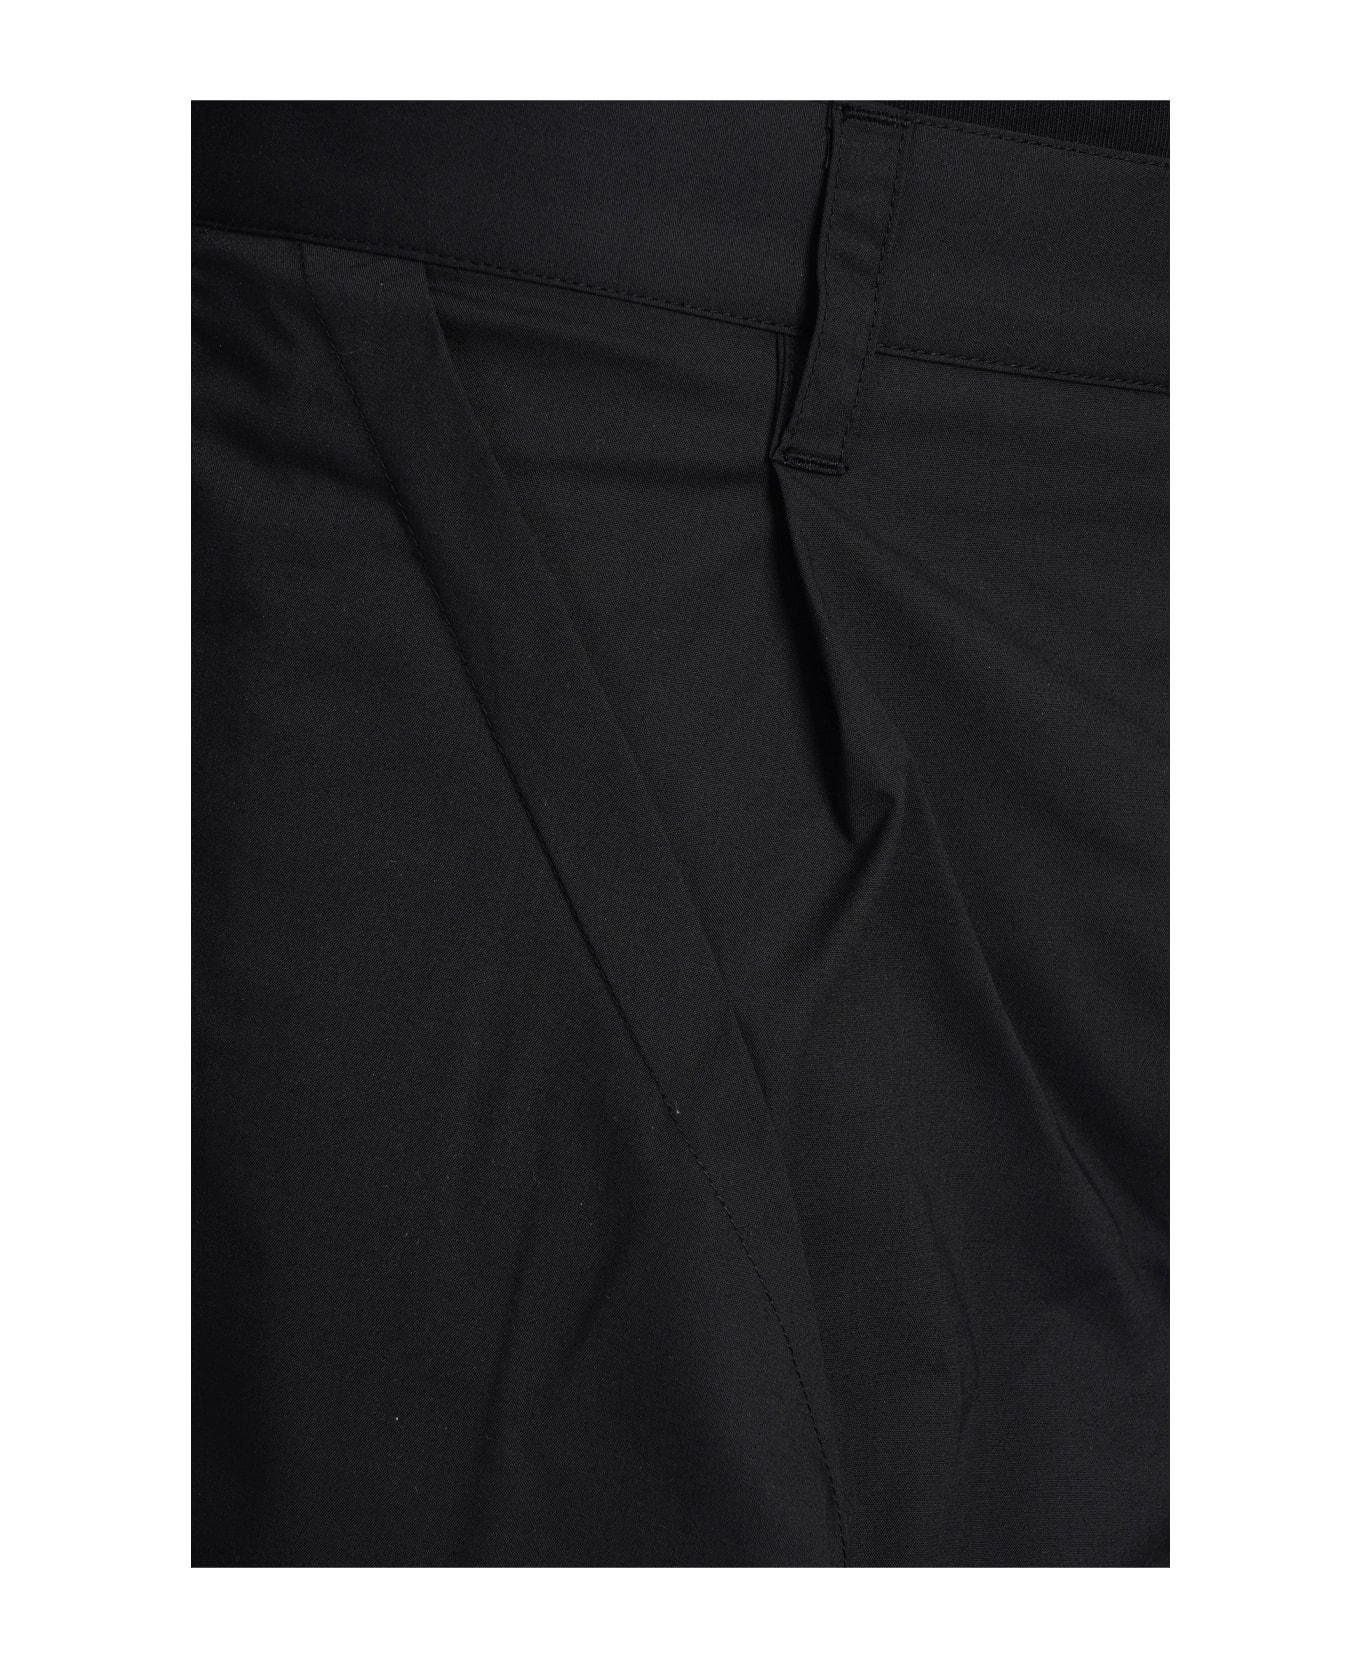 Undercover Jun Takahashi Pants In Black Polyester - black